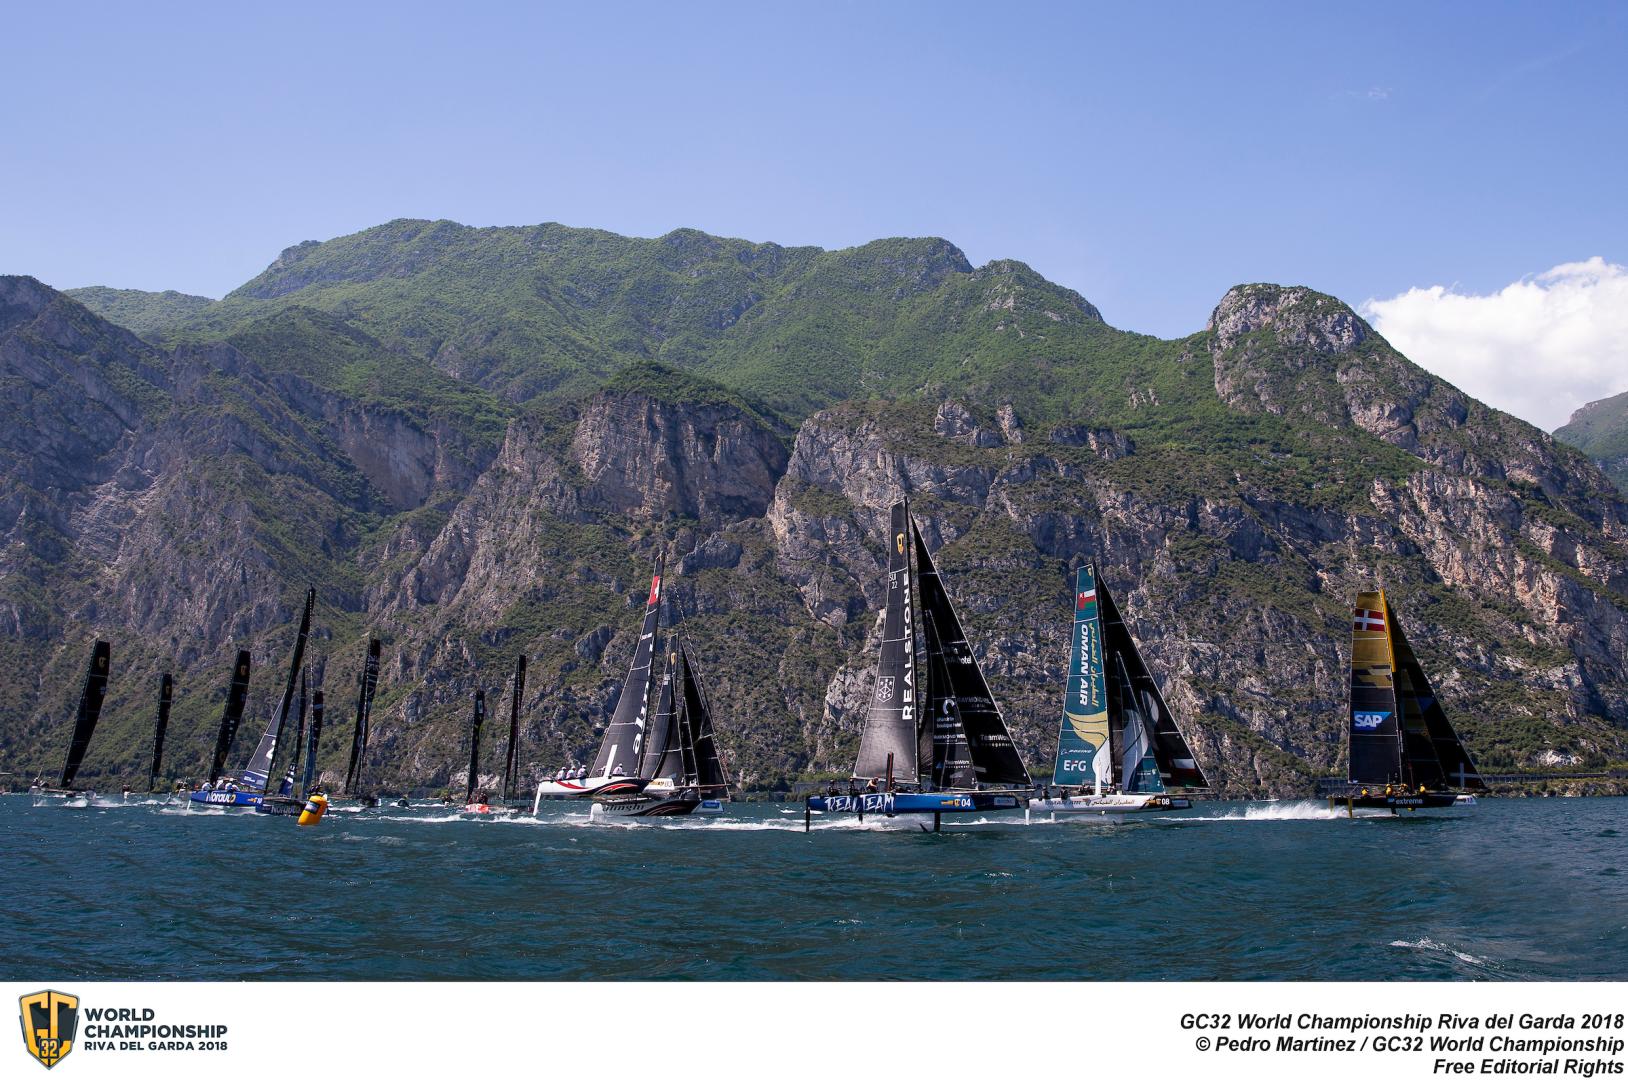 Full GC32 fleet competing at their first World Championship on Lake Garda last year